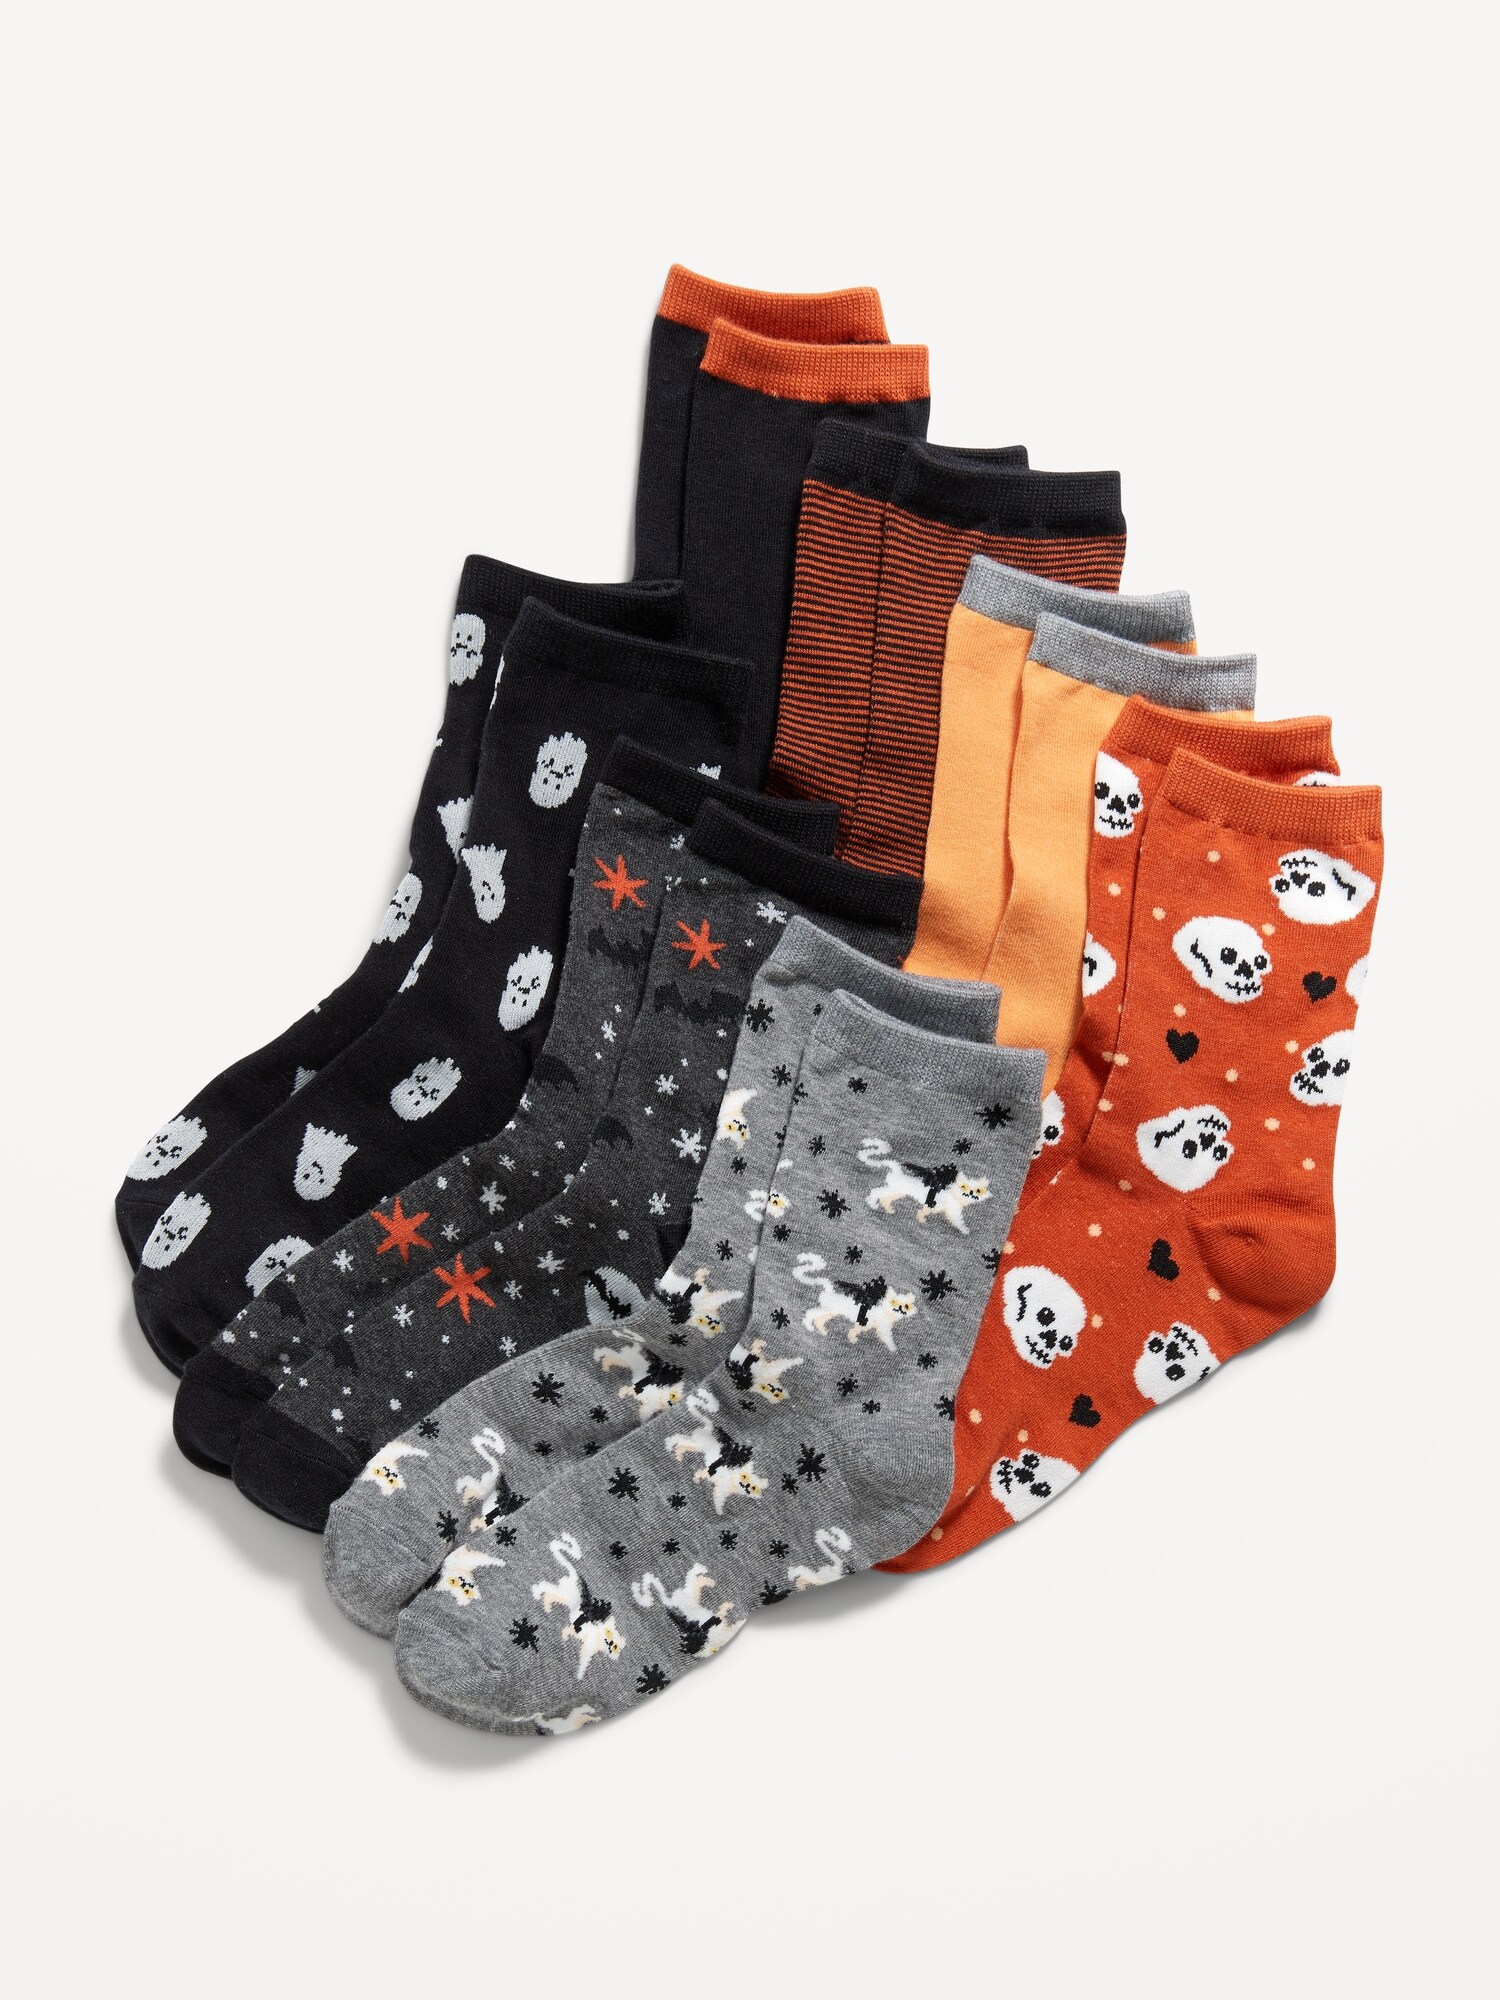 Gender-Neutral Printed Crew Socks 7-Pack for Kids